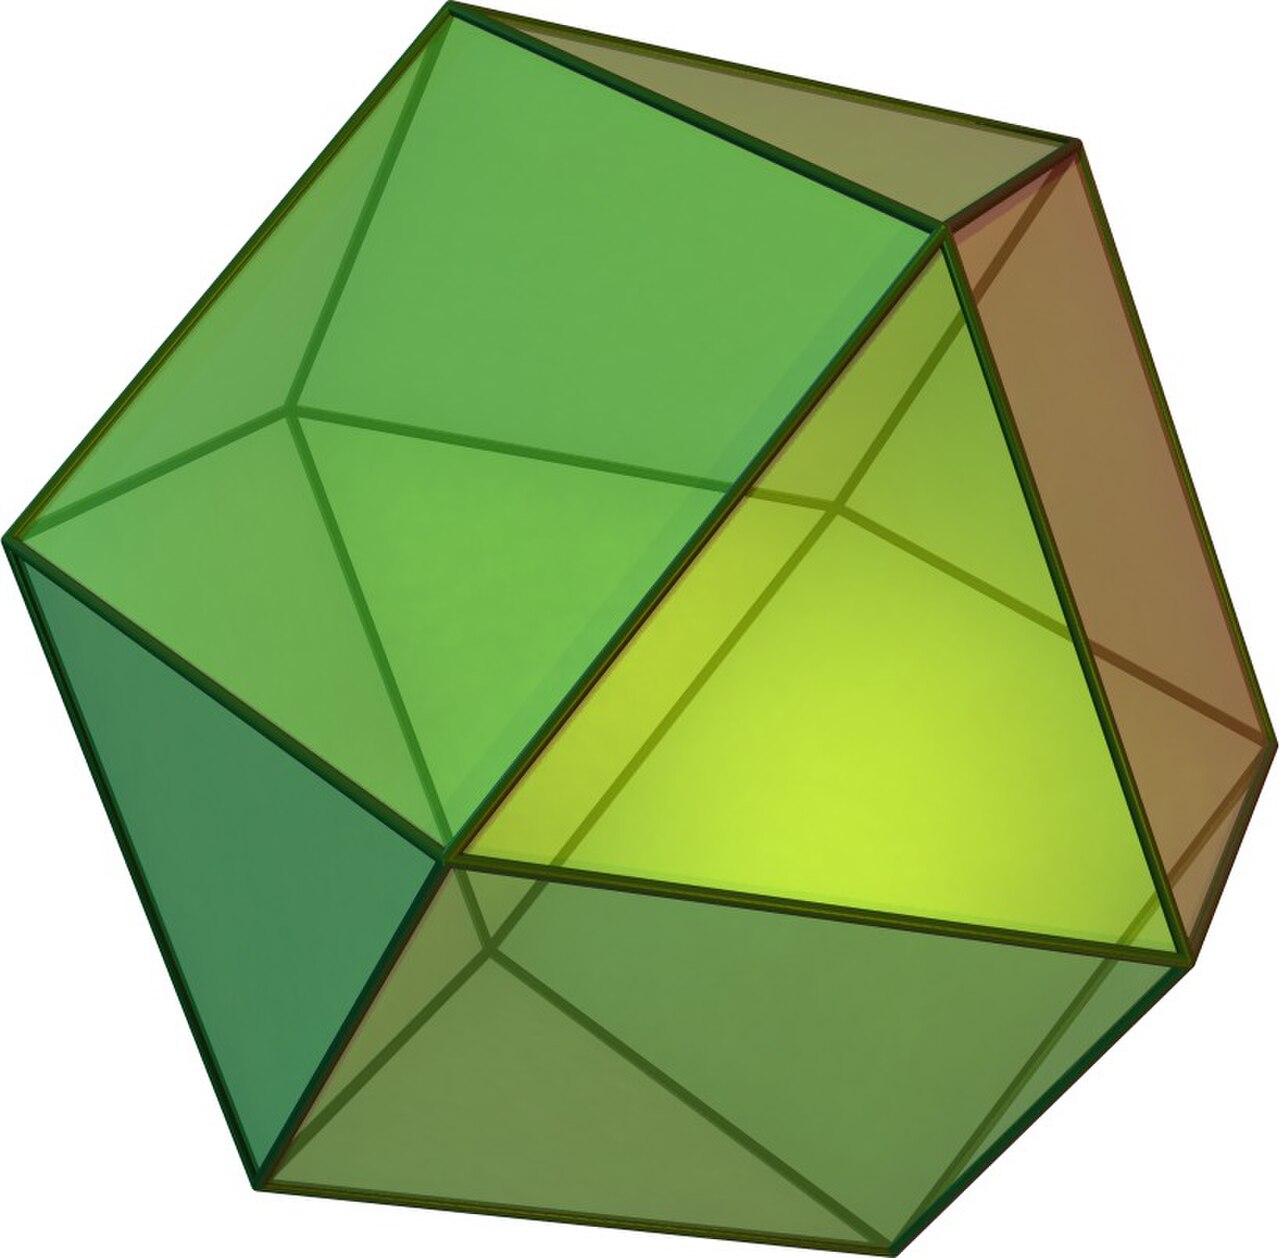 Октаэдр гексаэдр. Кубооктаэдр. Многогранник гексаэдр. Усеченный куб гексаэдр. Усеченный кубооктаэдр.